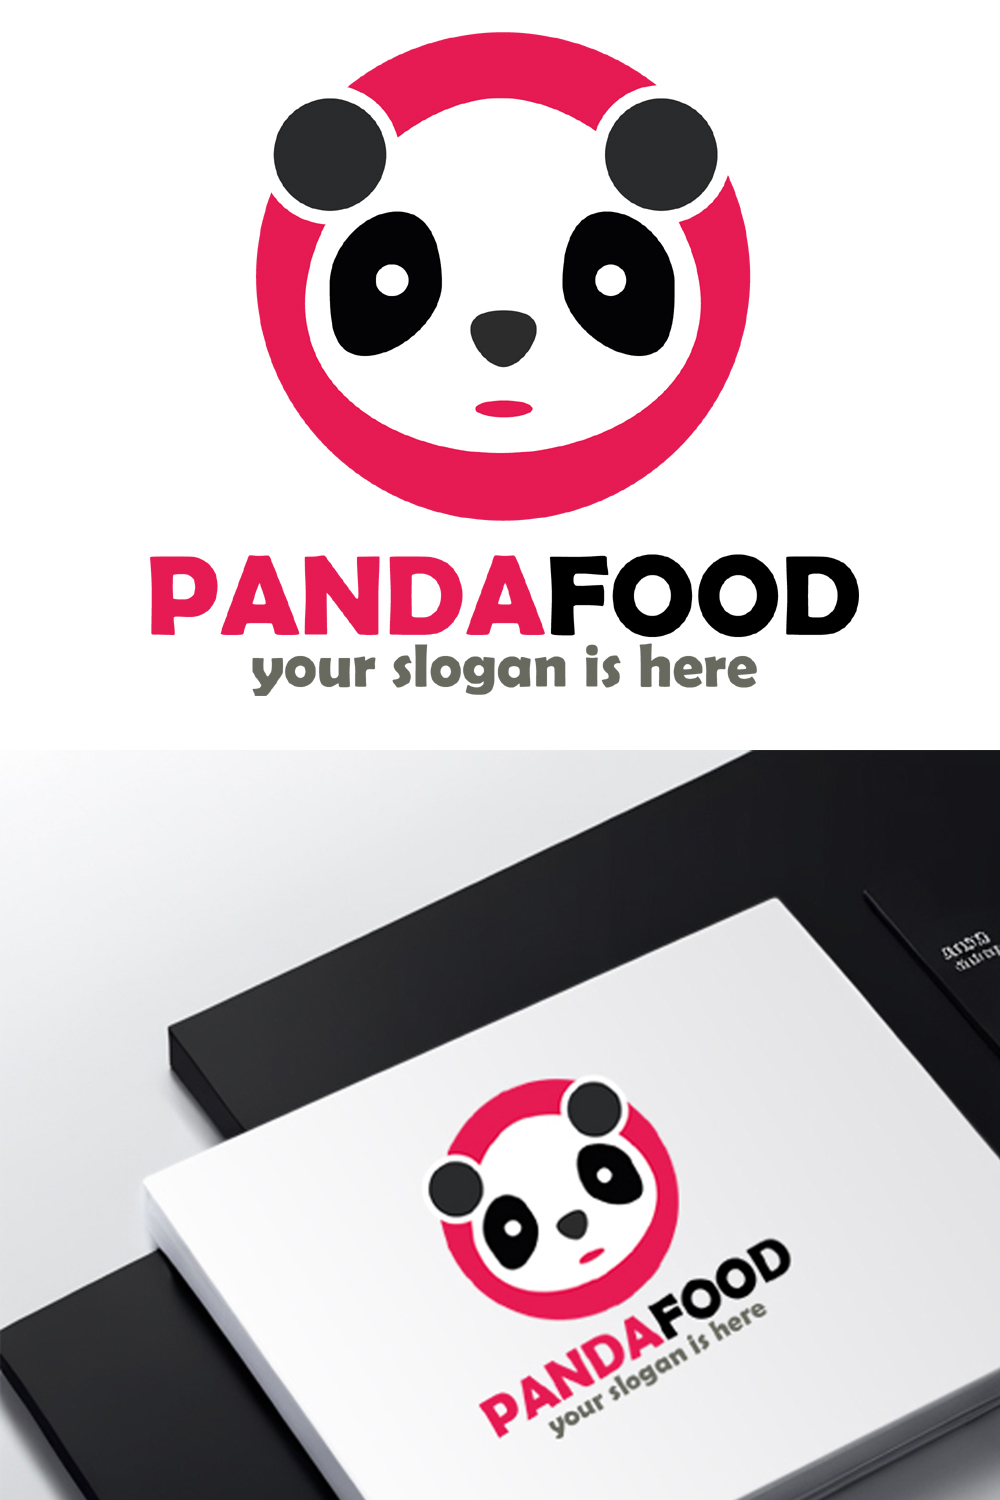 Food Panda Logo pinterest preview image.